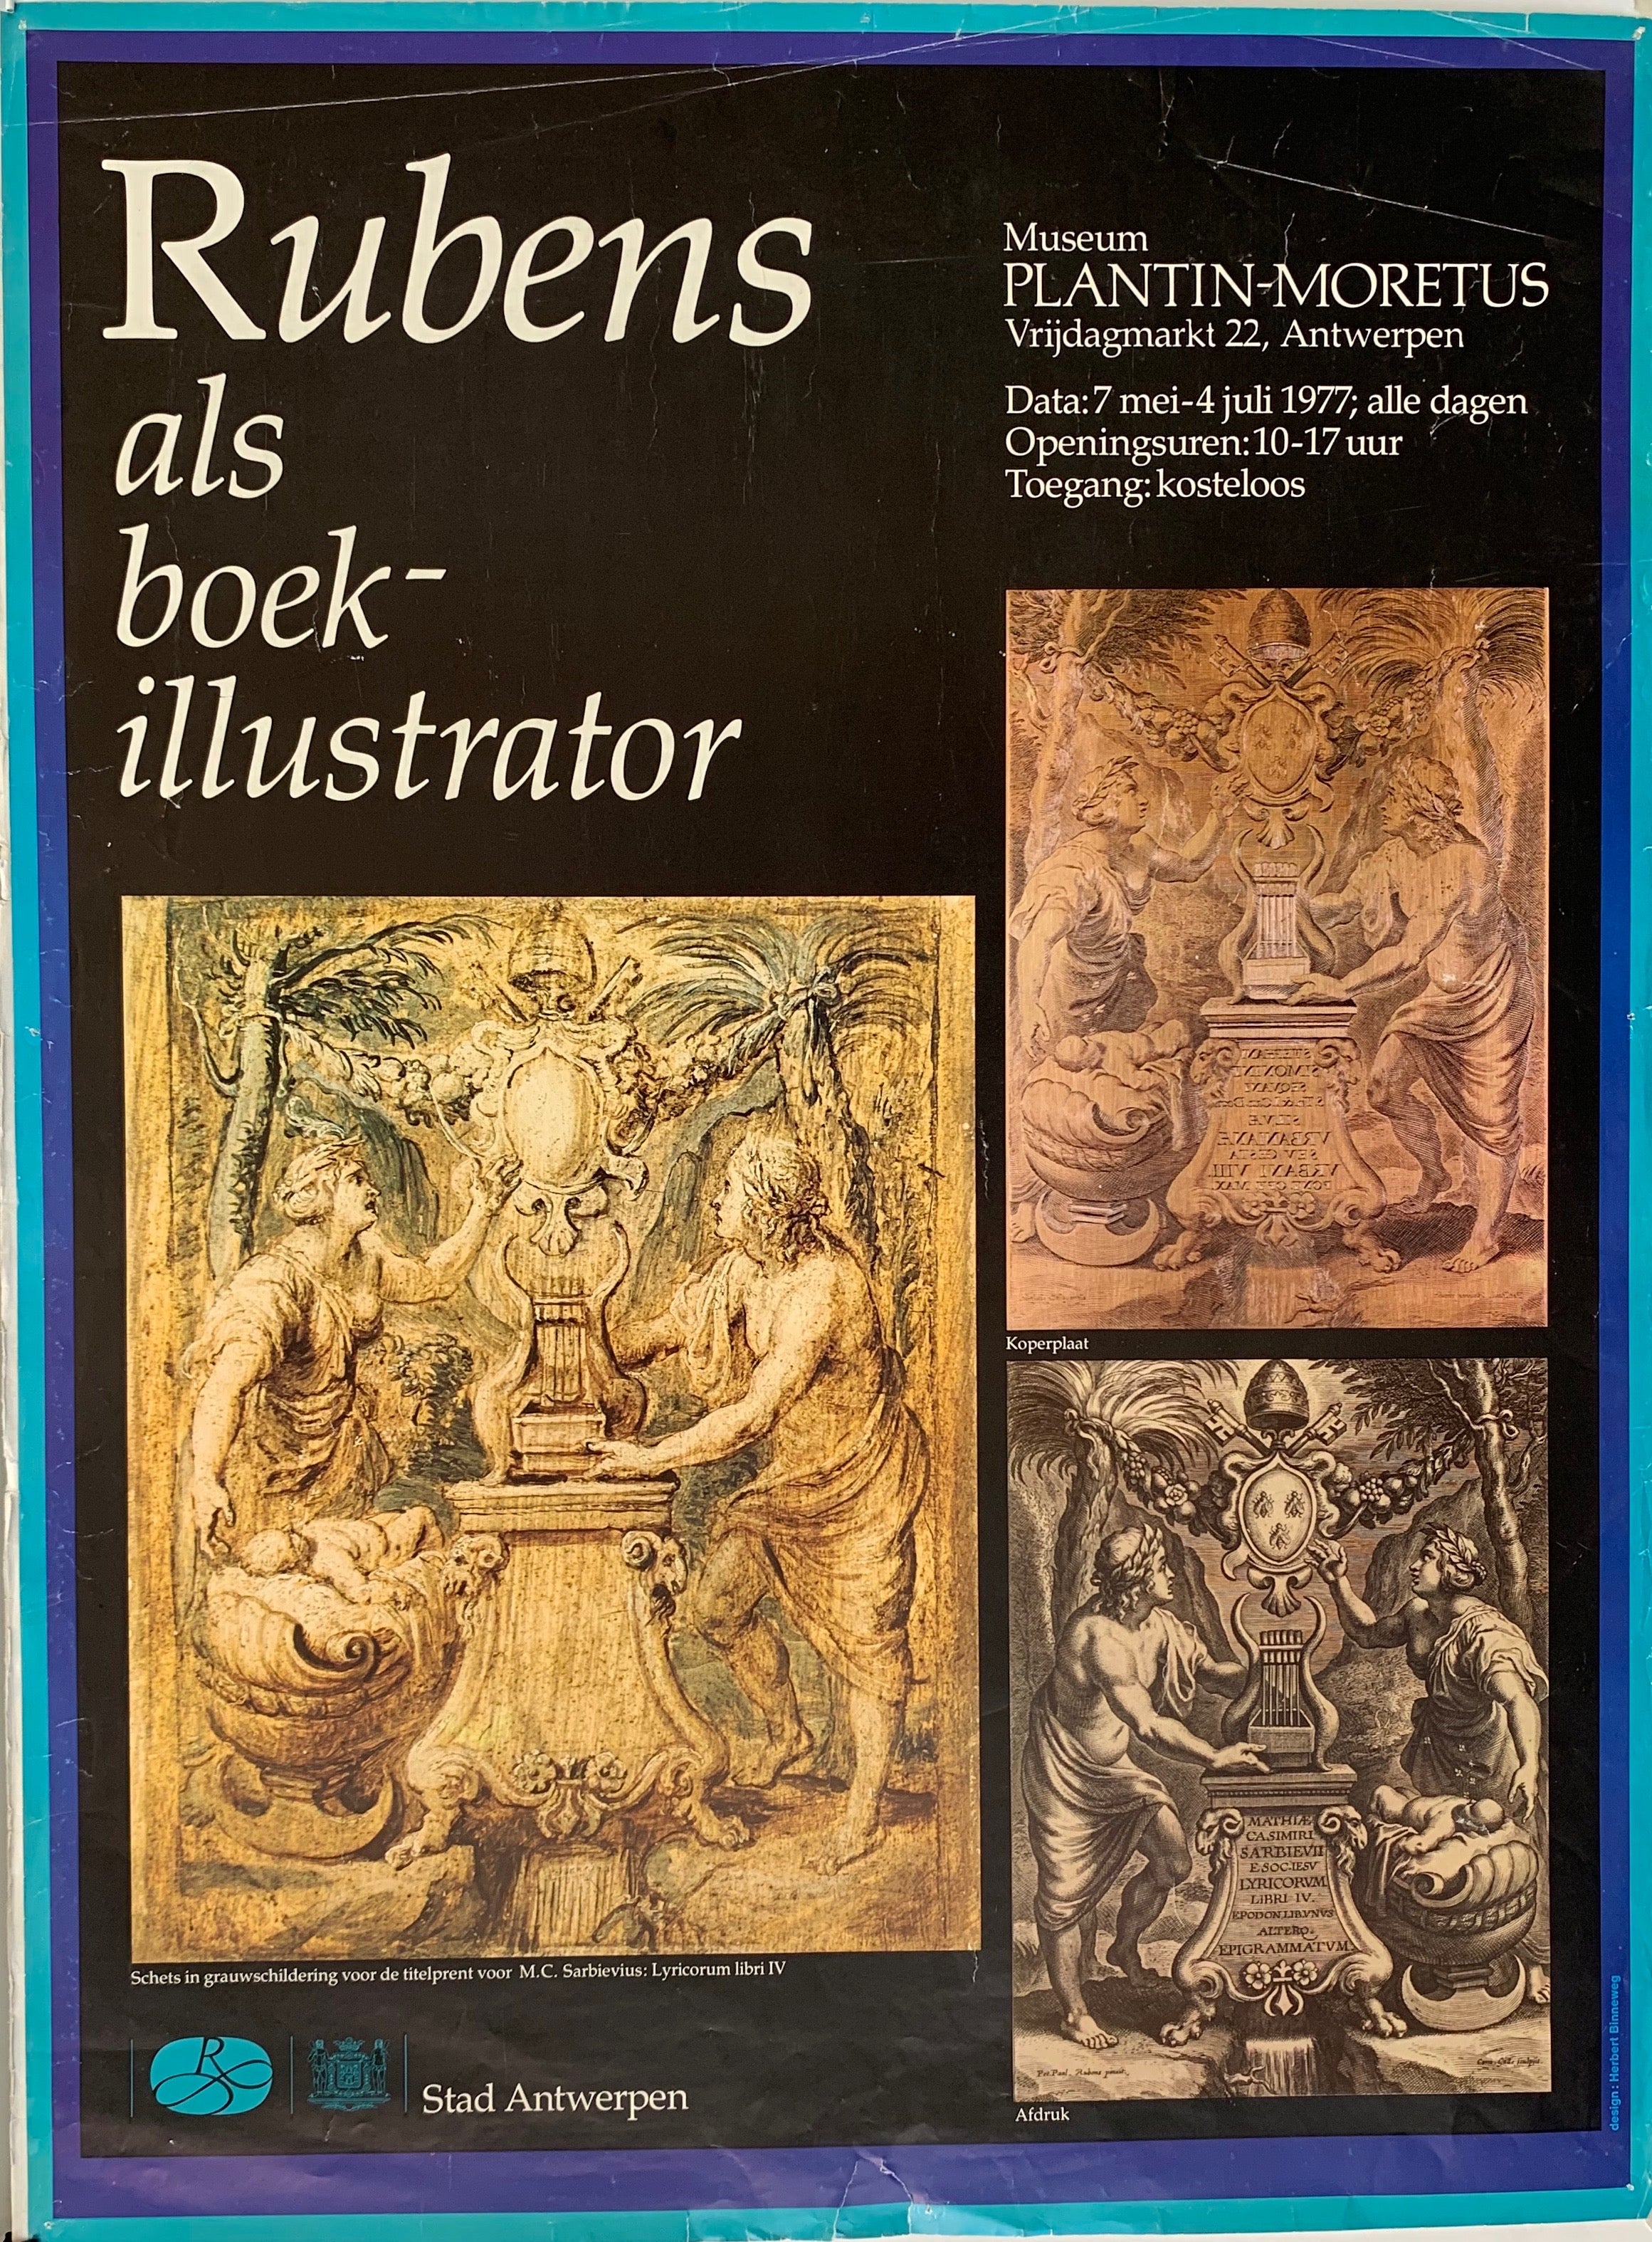 Rubens als boek-illustrator